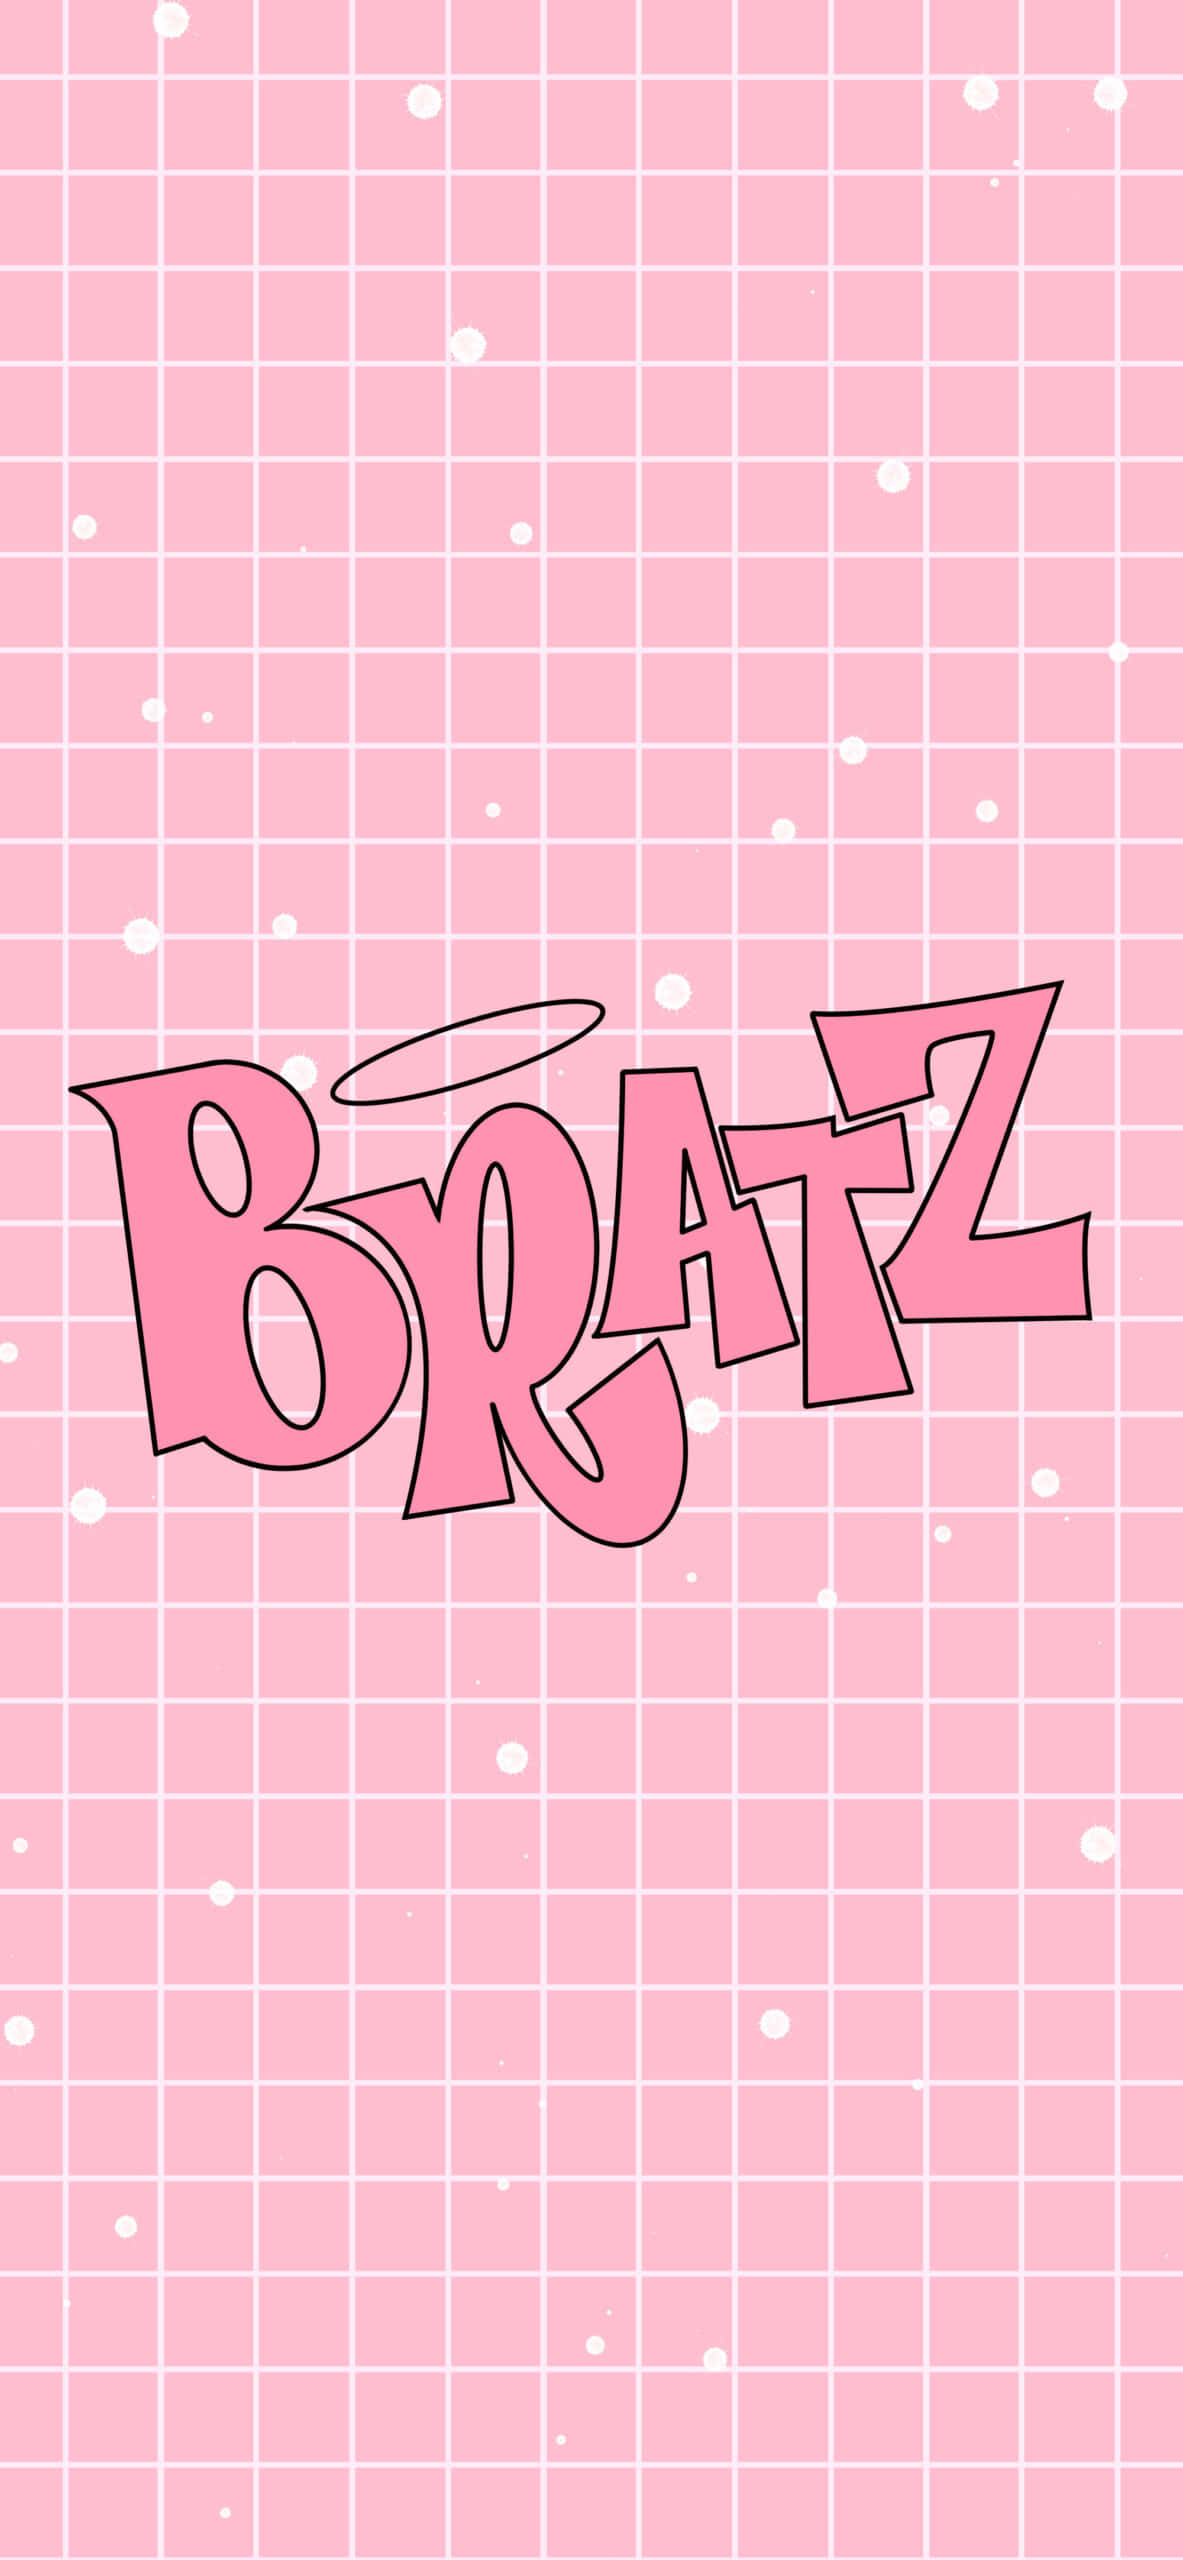 Brazz Wallpaper - Pink